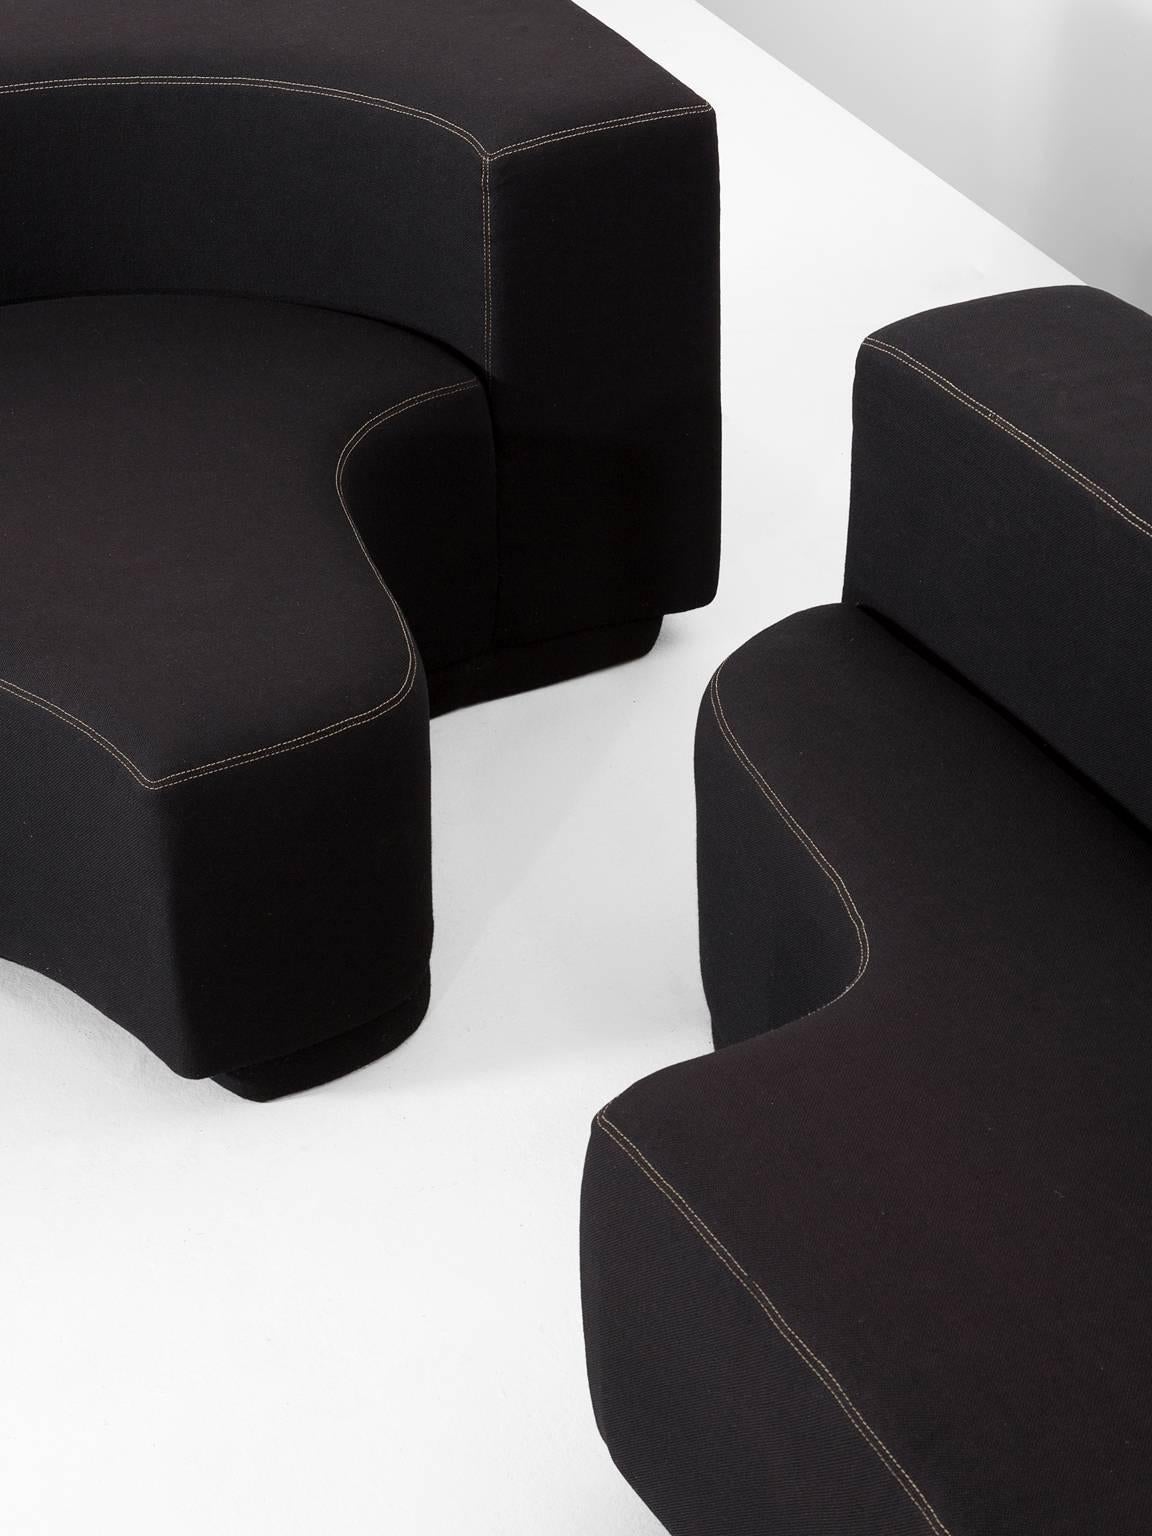 Mid-20th Century 'Lara' Modular Sofa in Black Fabric Upholstery